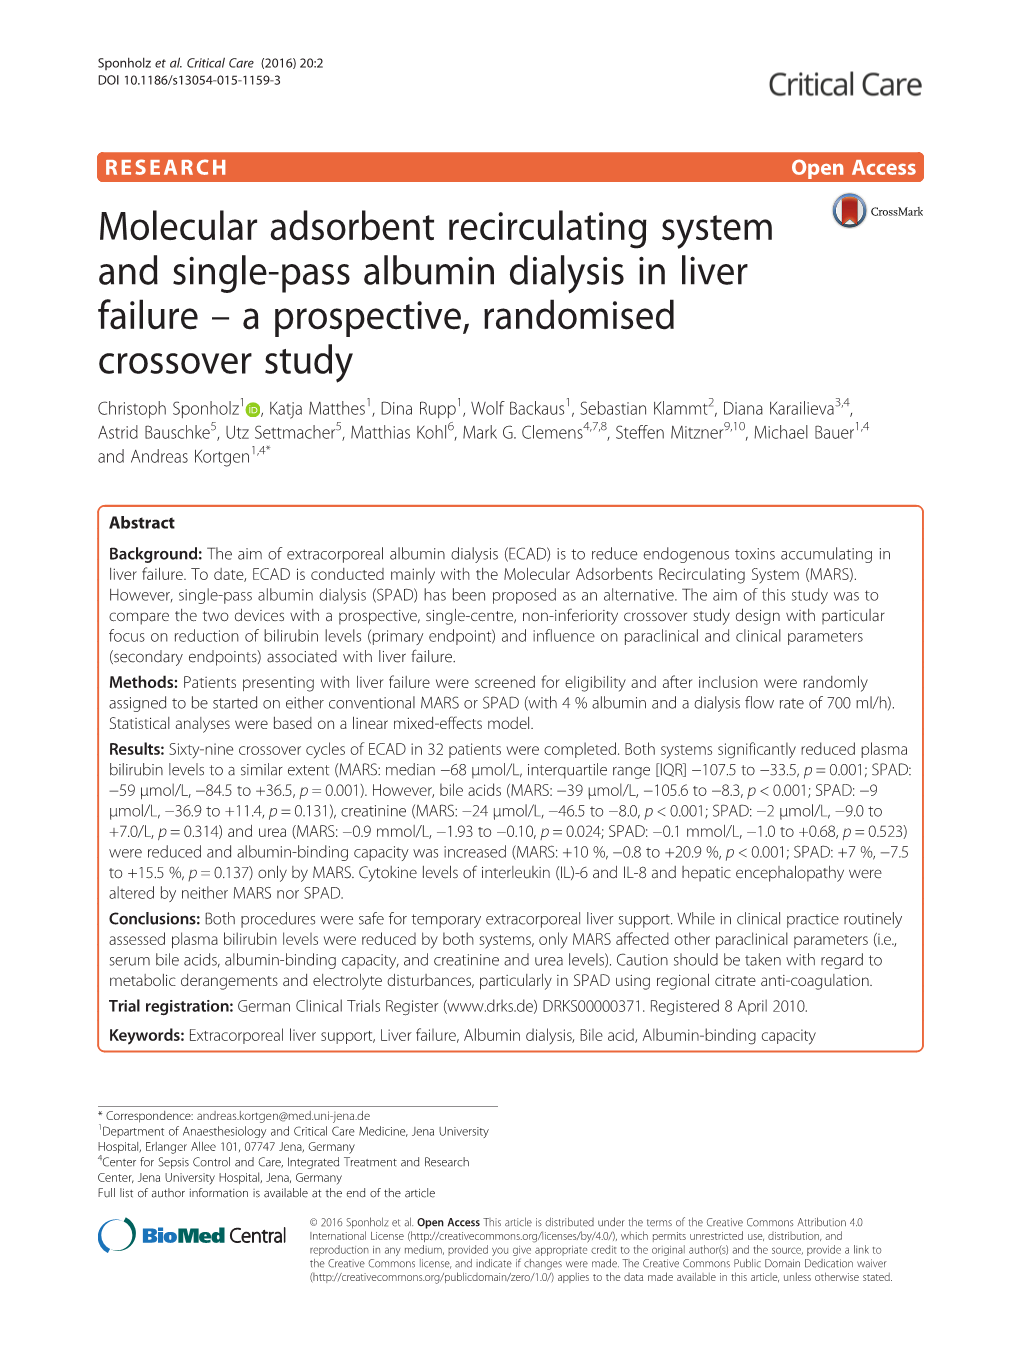 Molecular Adsorbent Recirculating System and Single